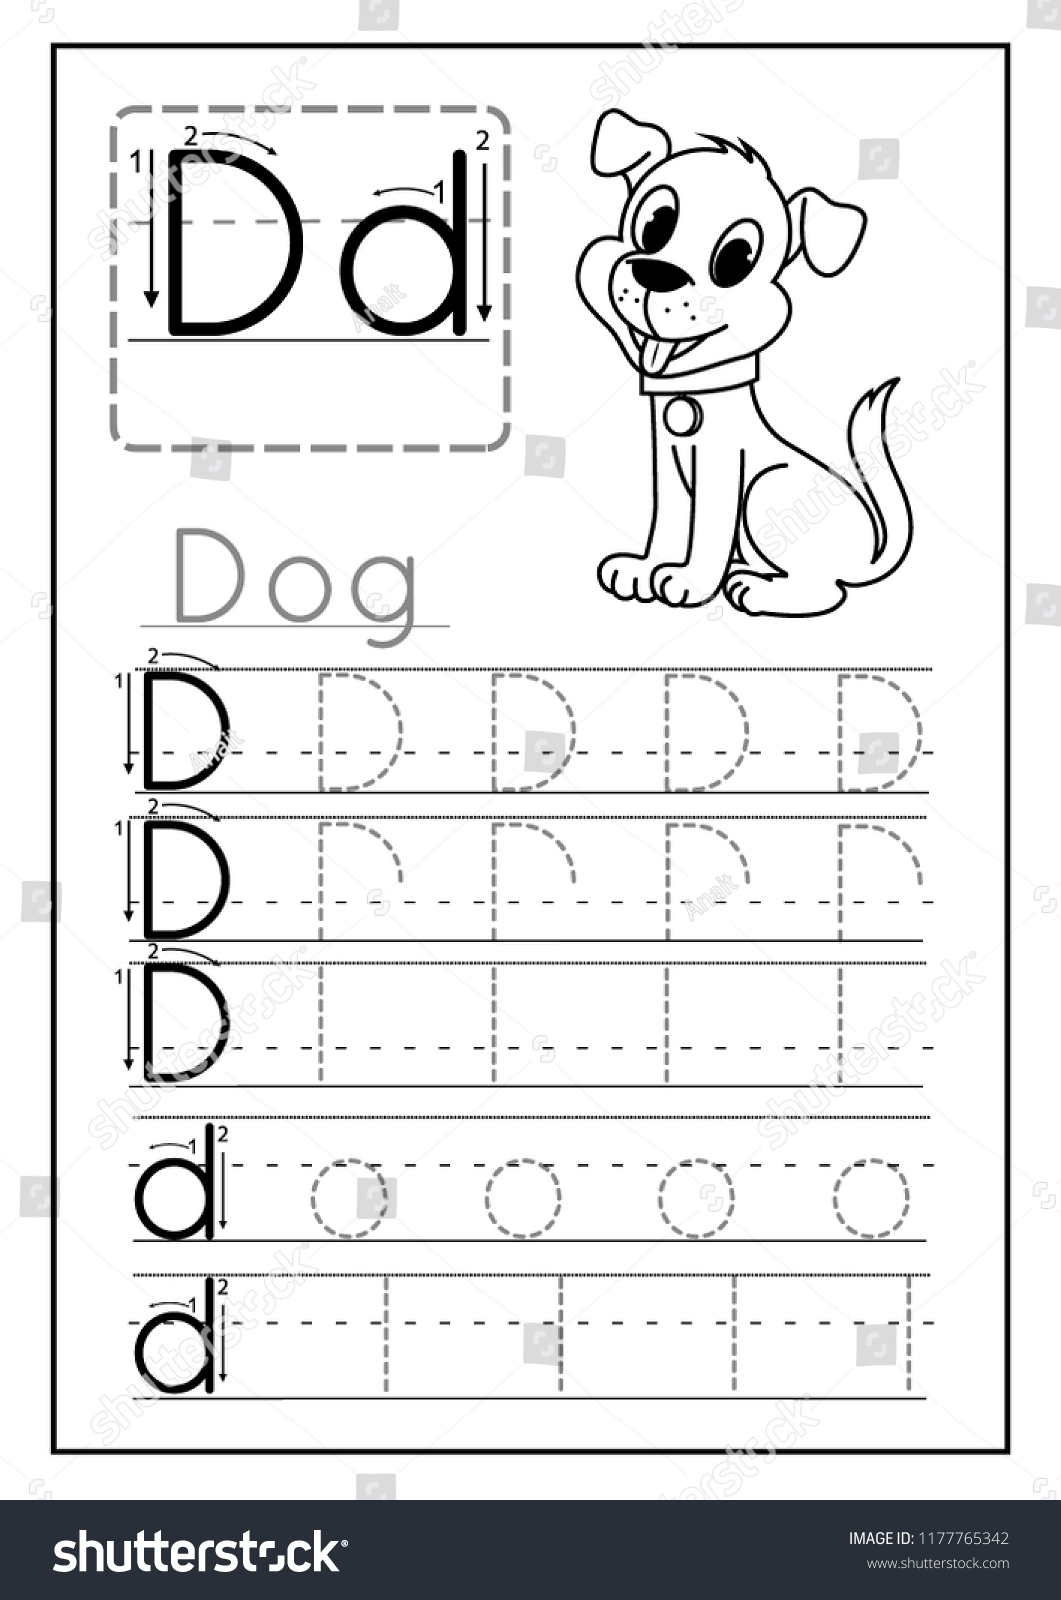 Writing Practice Letter D Printable Worksheet Stock Vector With Regard To Letter D Worksheet For Preschool